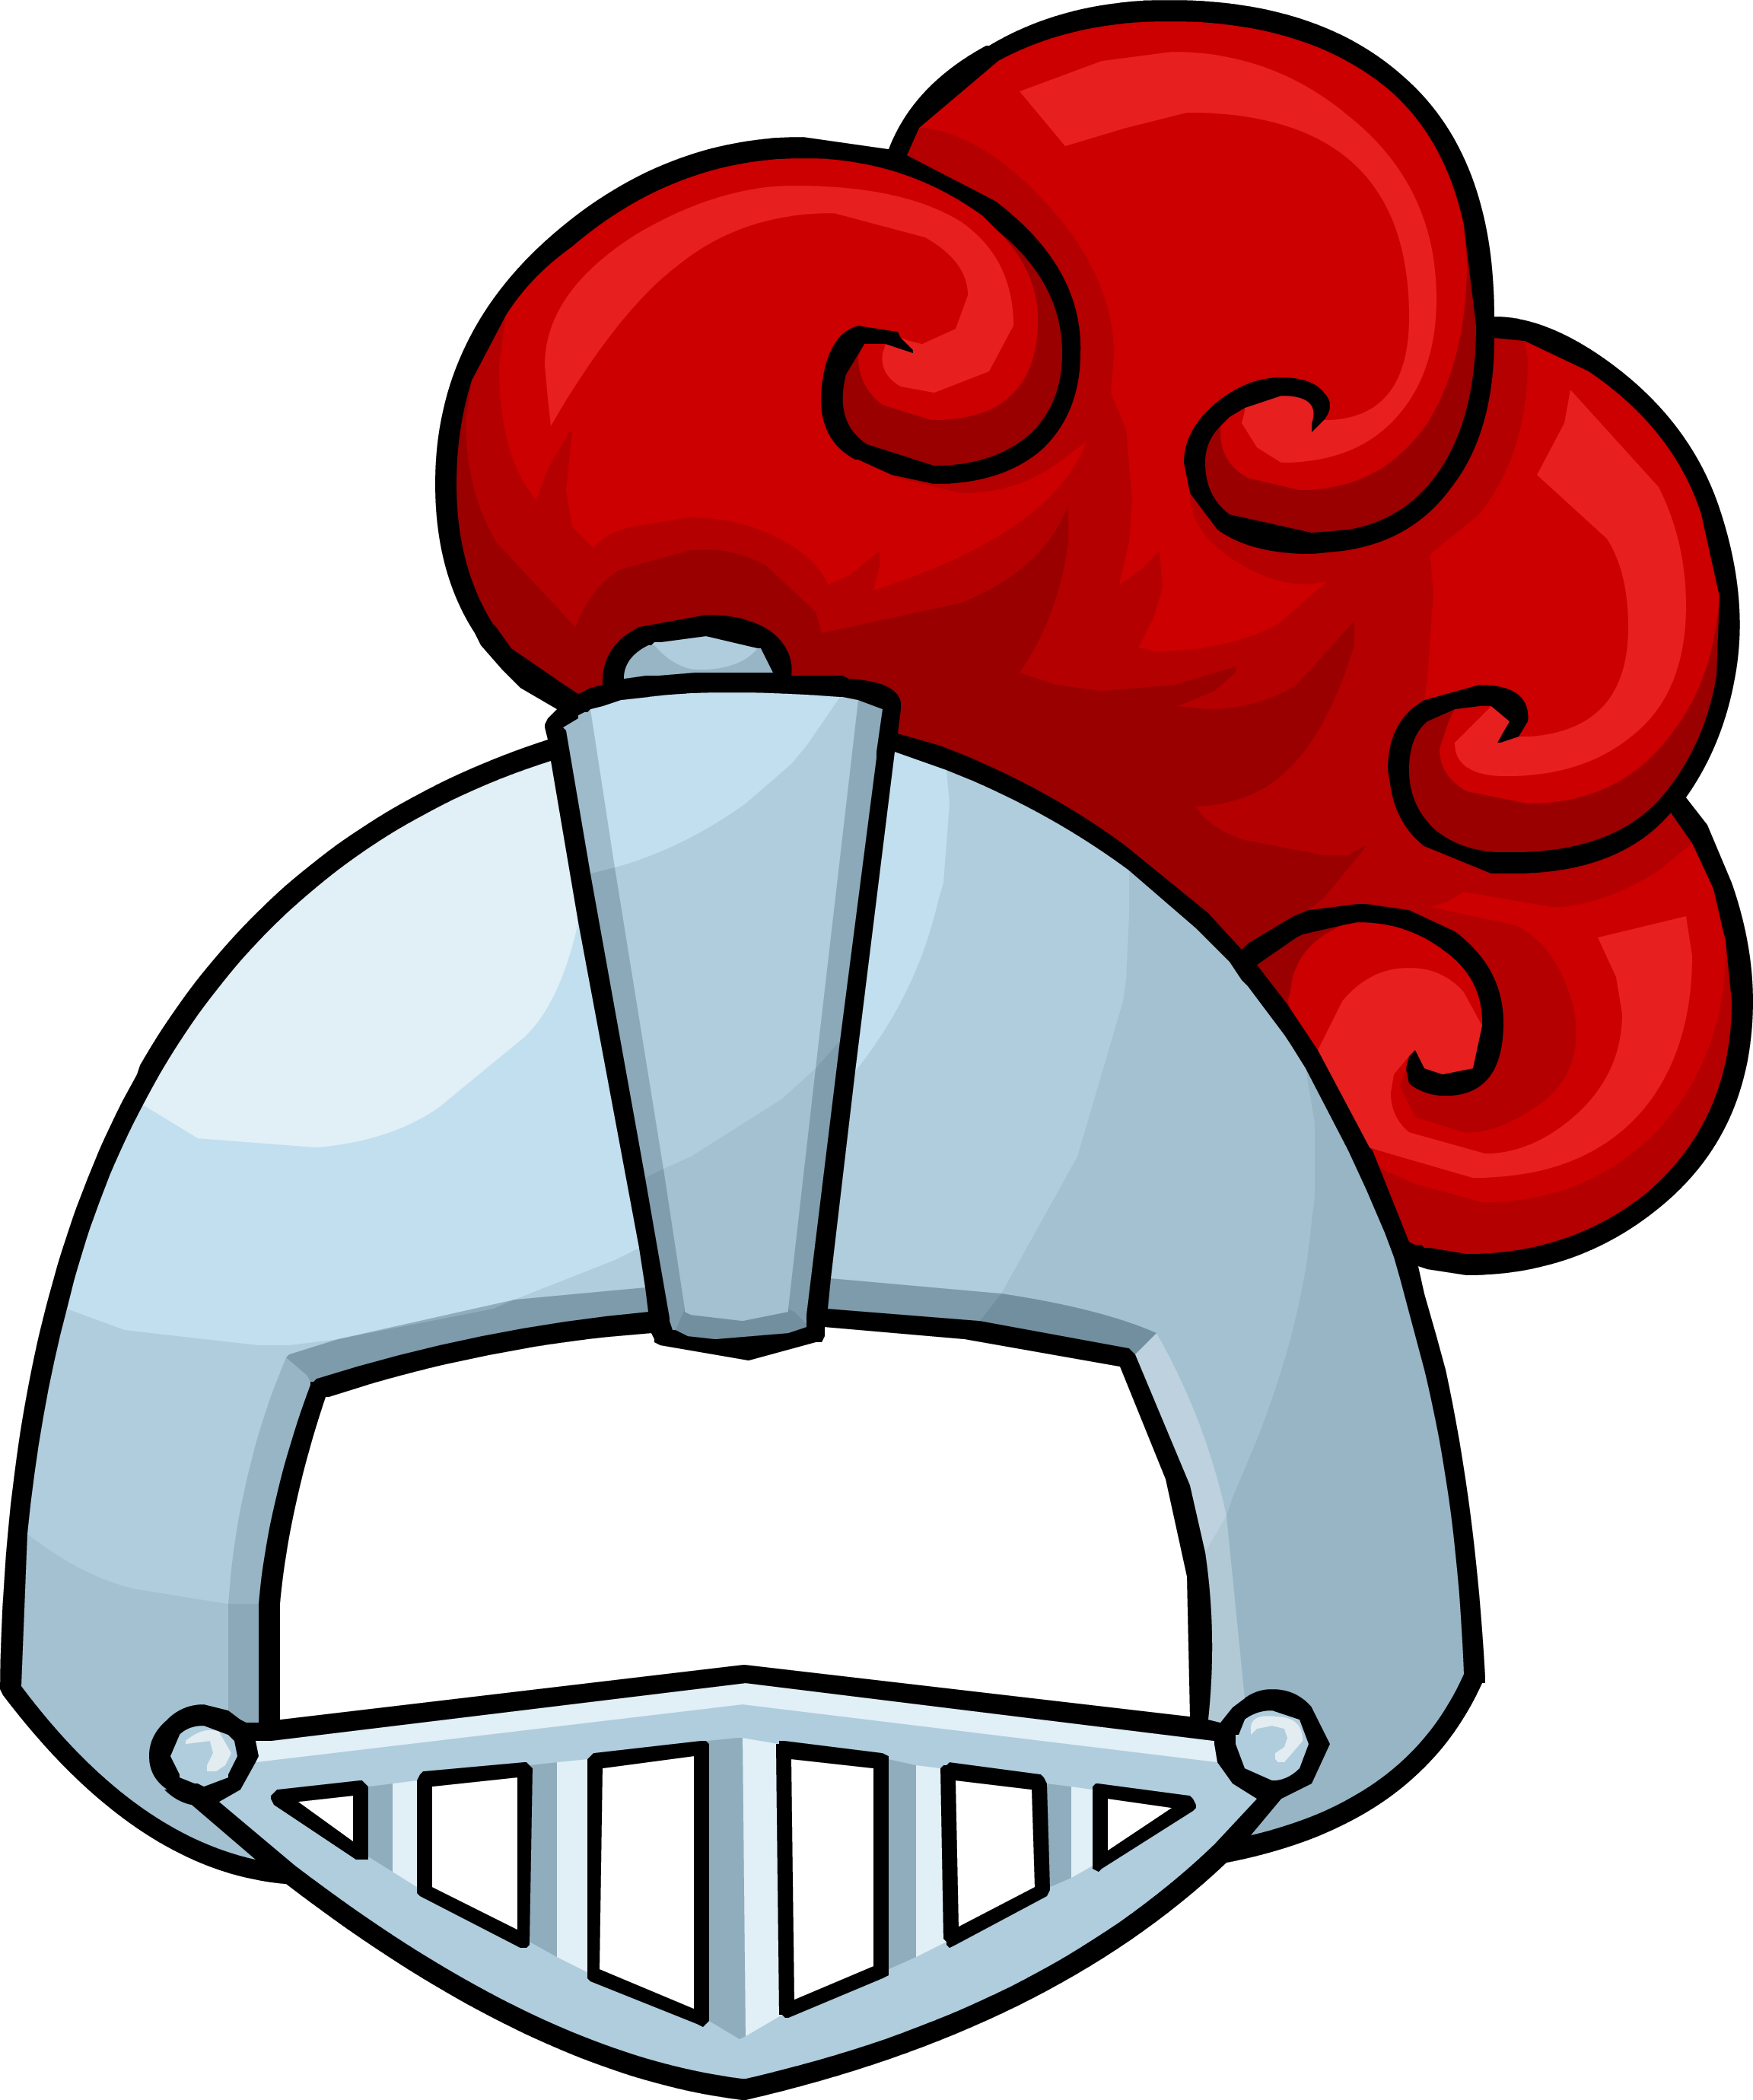 Knight Clipart Helmet Knight Helmet Transparent Free For Download On Webstockreview 2020 - knight helmet id roblox